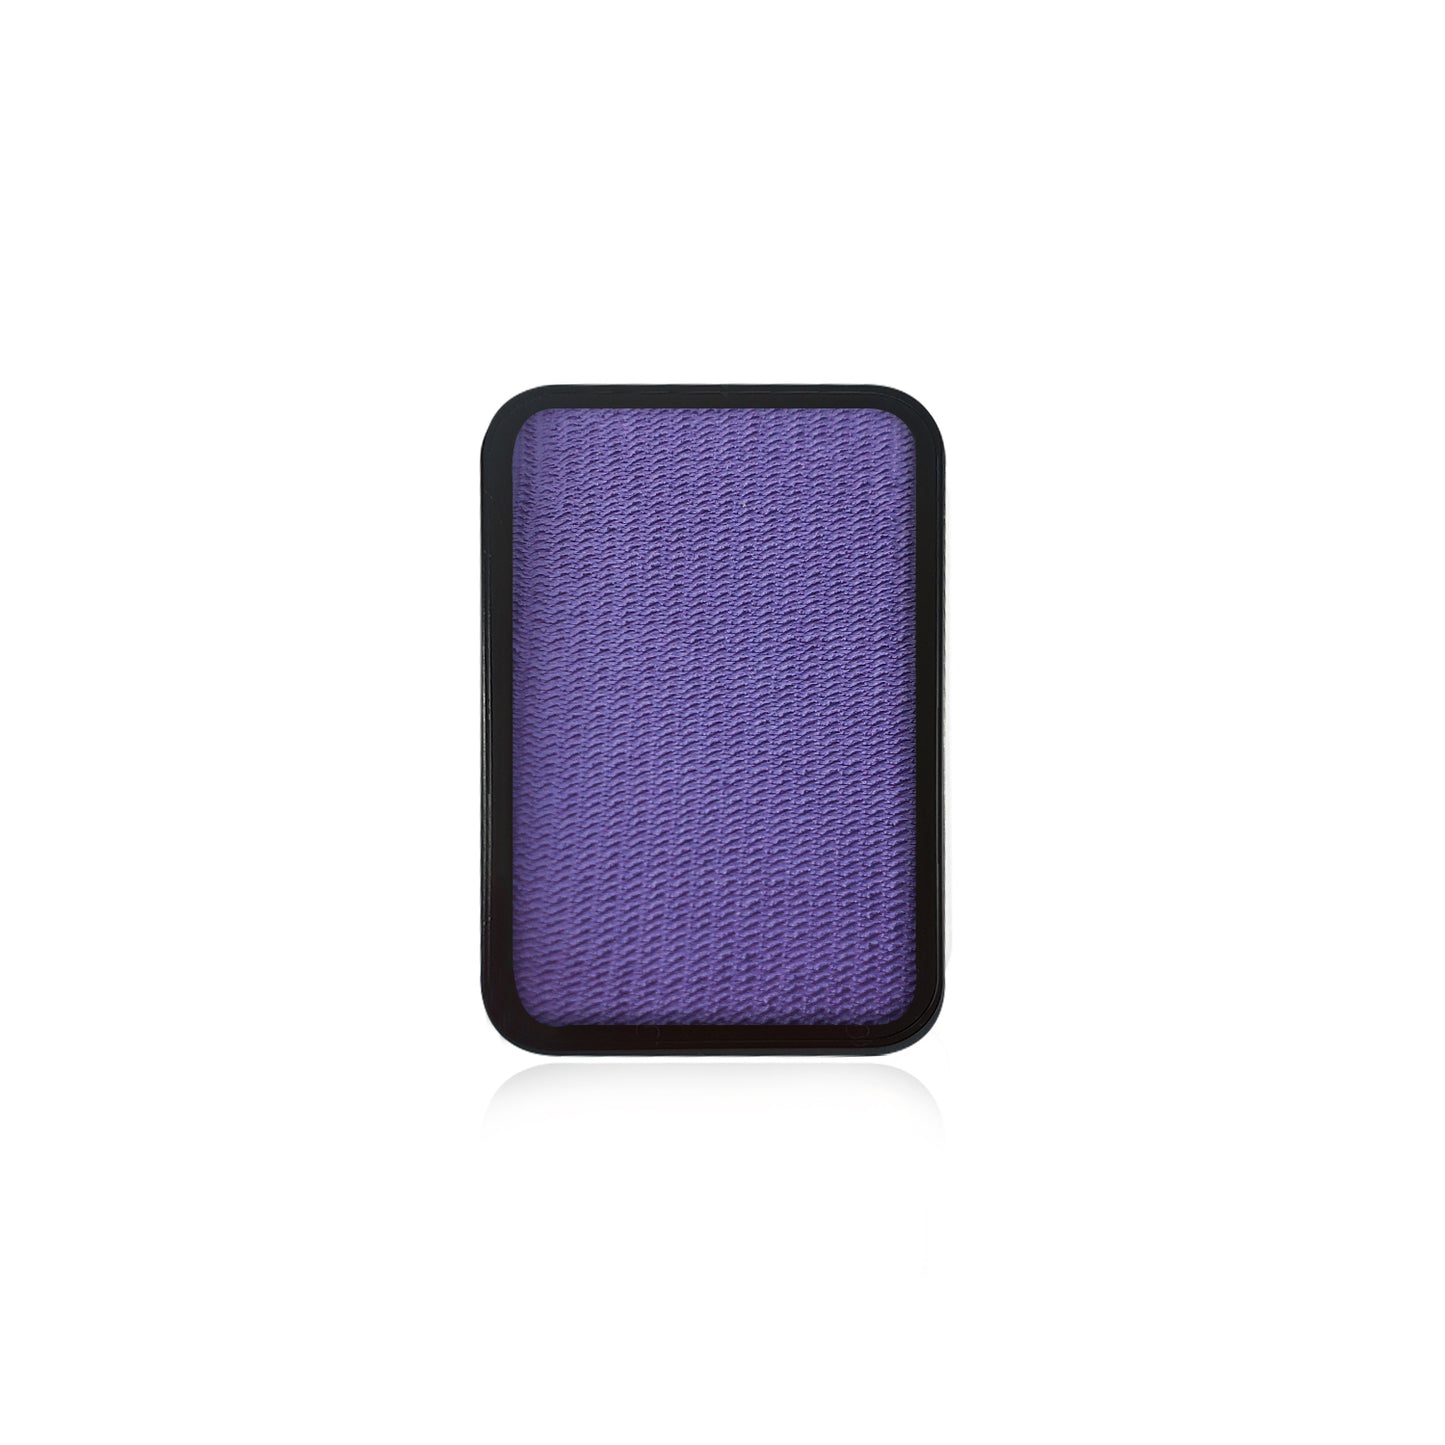 Kraze FX Face Paint Refill - Purple (10 gm)